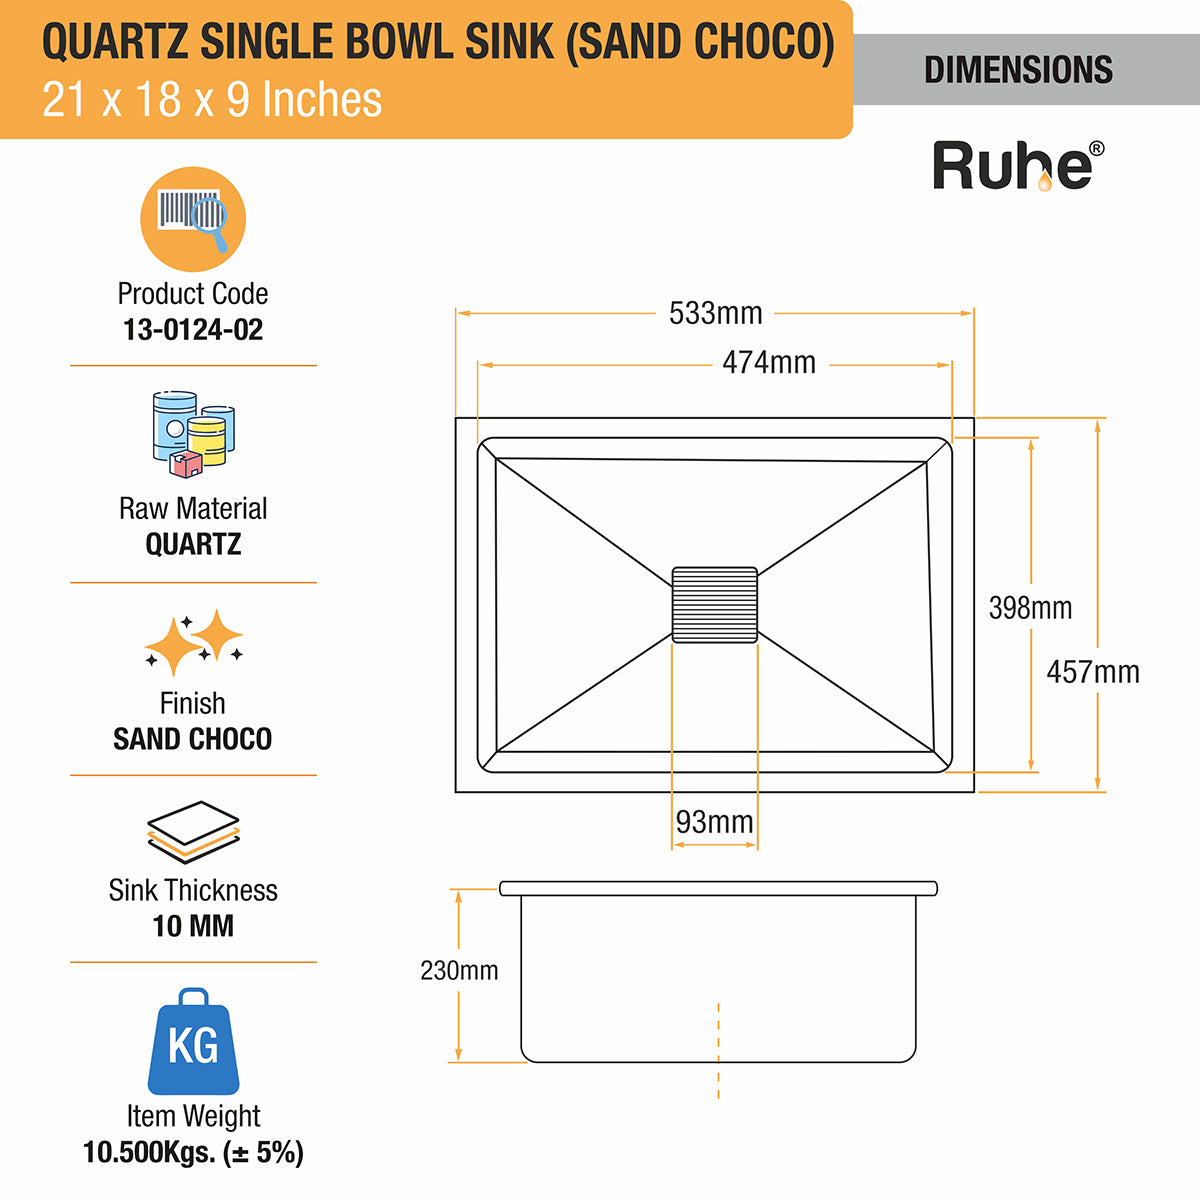 Quartz Sand Choco Single Bowl Kitchen Sink (21 x 18 x 9 inches) dimensions and sizes